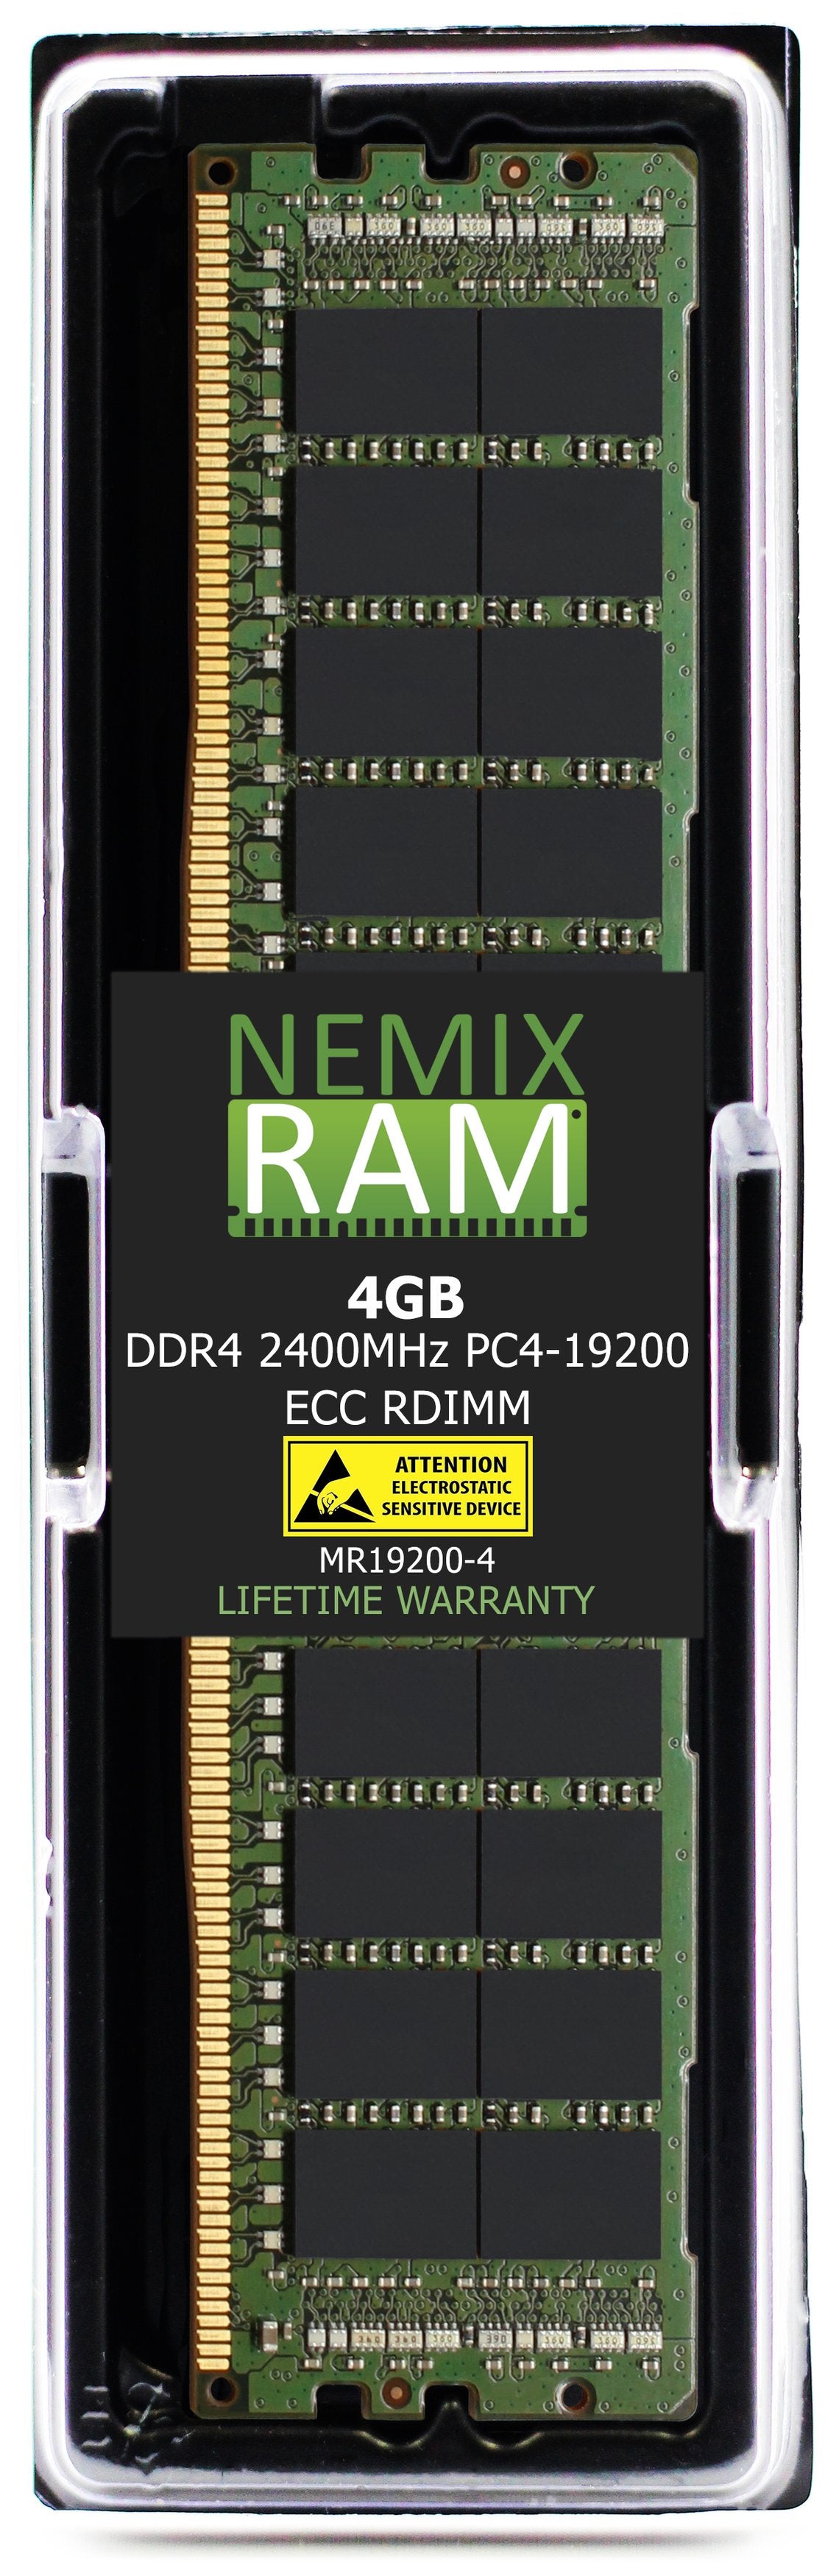 8GB DDR4 2400MHZ PC4-19200 RDIMM Compatible with Supermicro MEM-DR480L-SL02-ER24